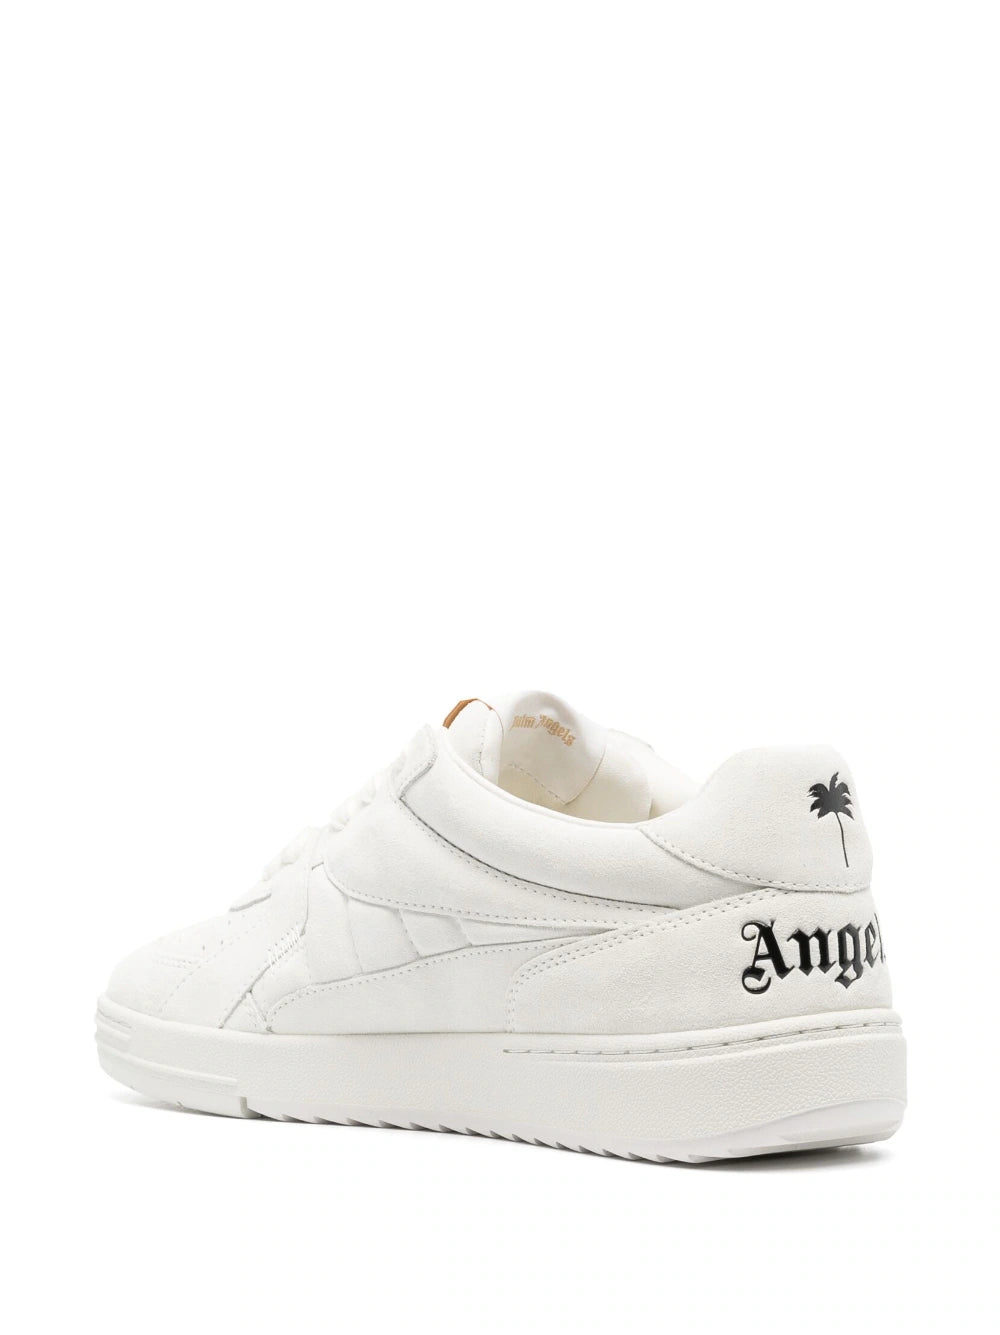 PALM ANGELS University Origin Suede Sneakers Cream/White - MAISONDEFASHION.COM